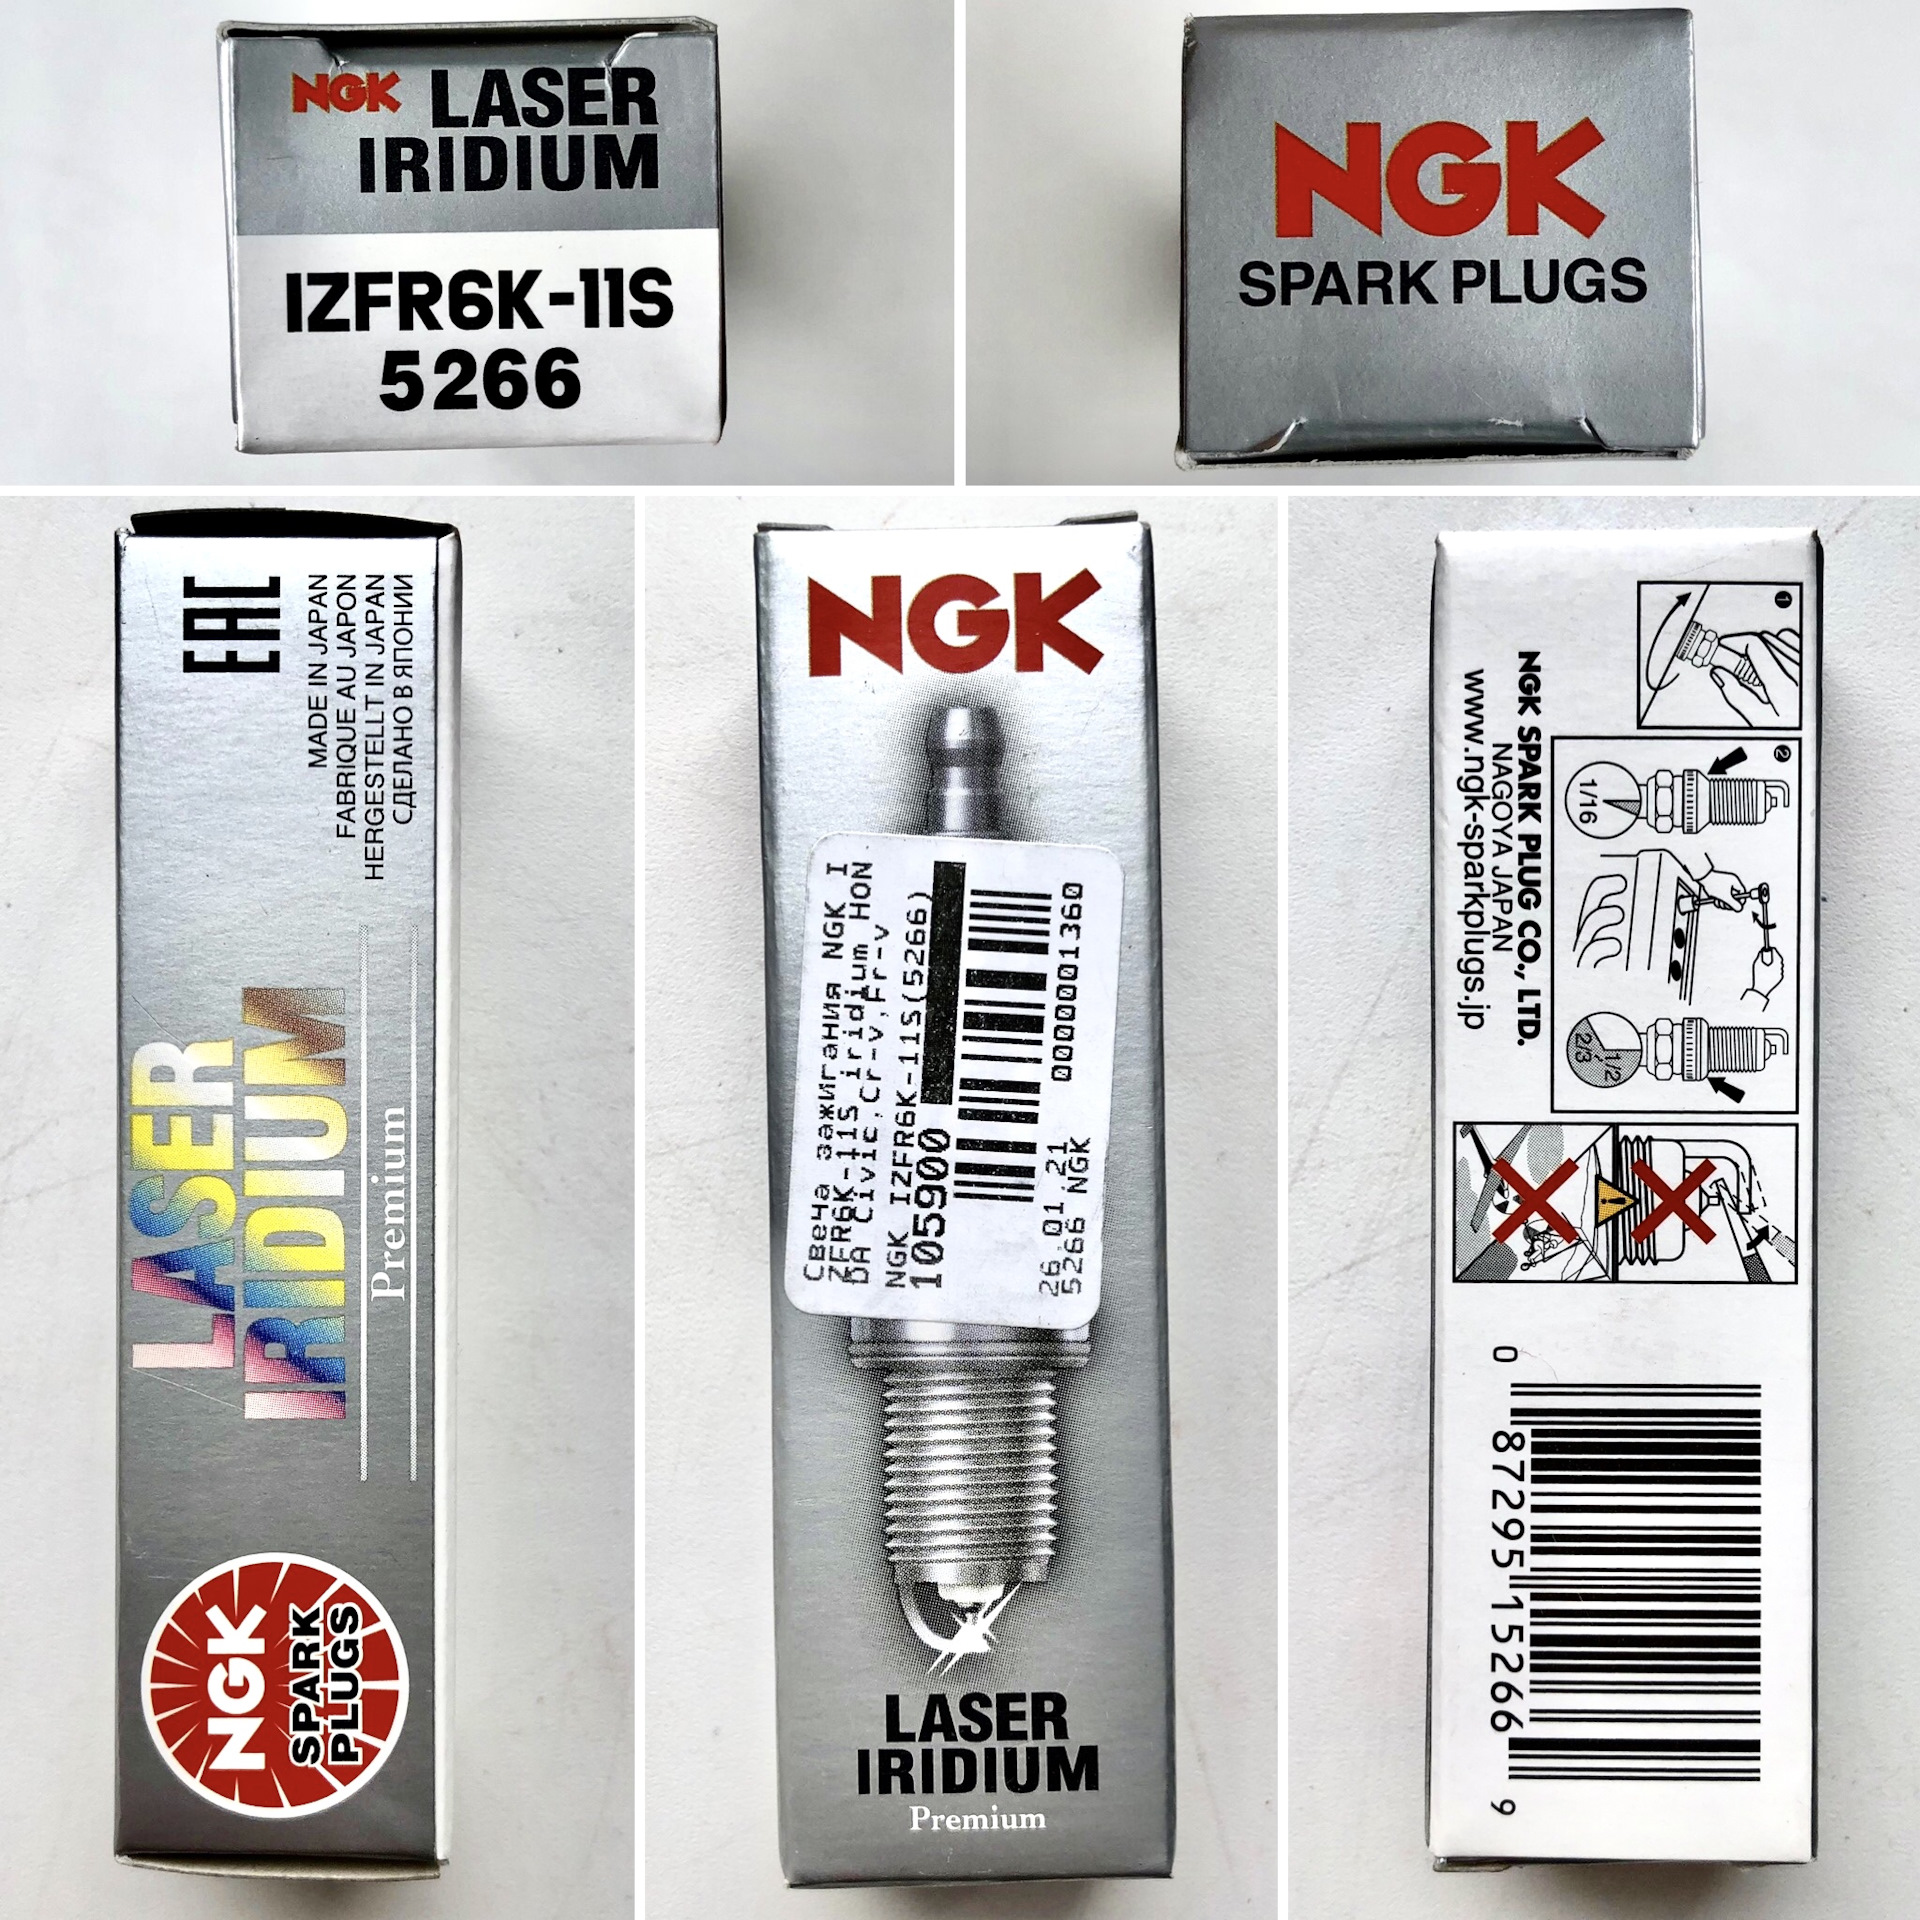 Как отличить свечи ngk. NGK izfr6k-11 размер ключа. Izfr6k-11s от NGK В упаковке NGK. Свечи зажигания Хонда Аккорд 8 2.4. Оригинальная упаковка свечи NGK izfr6k11s.